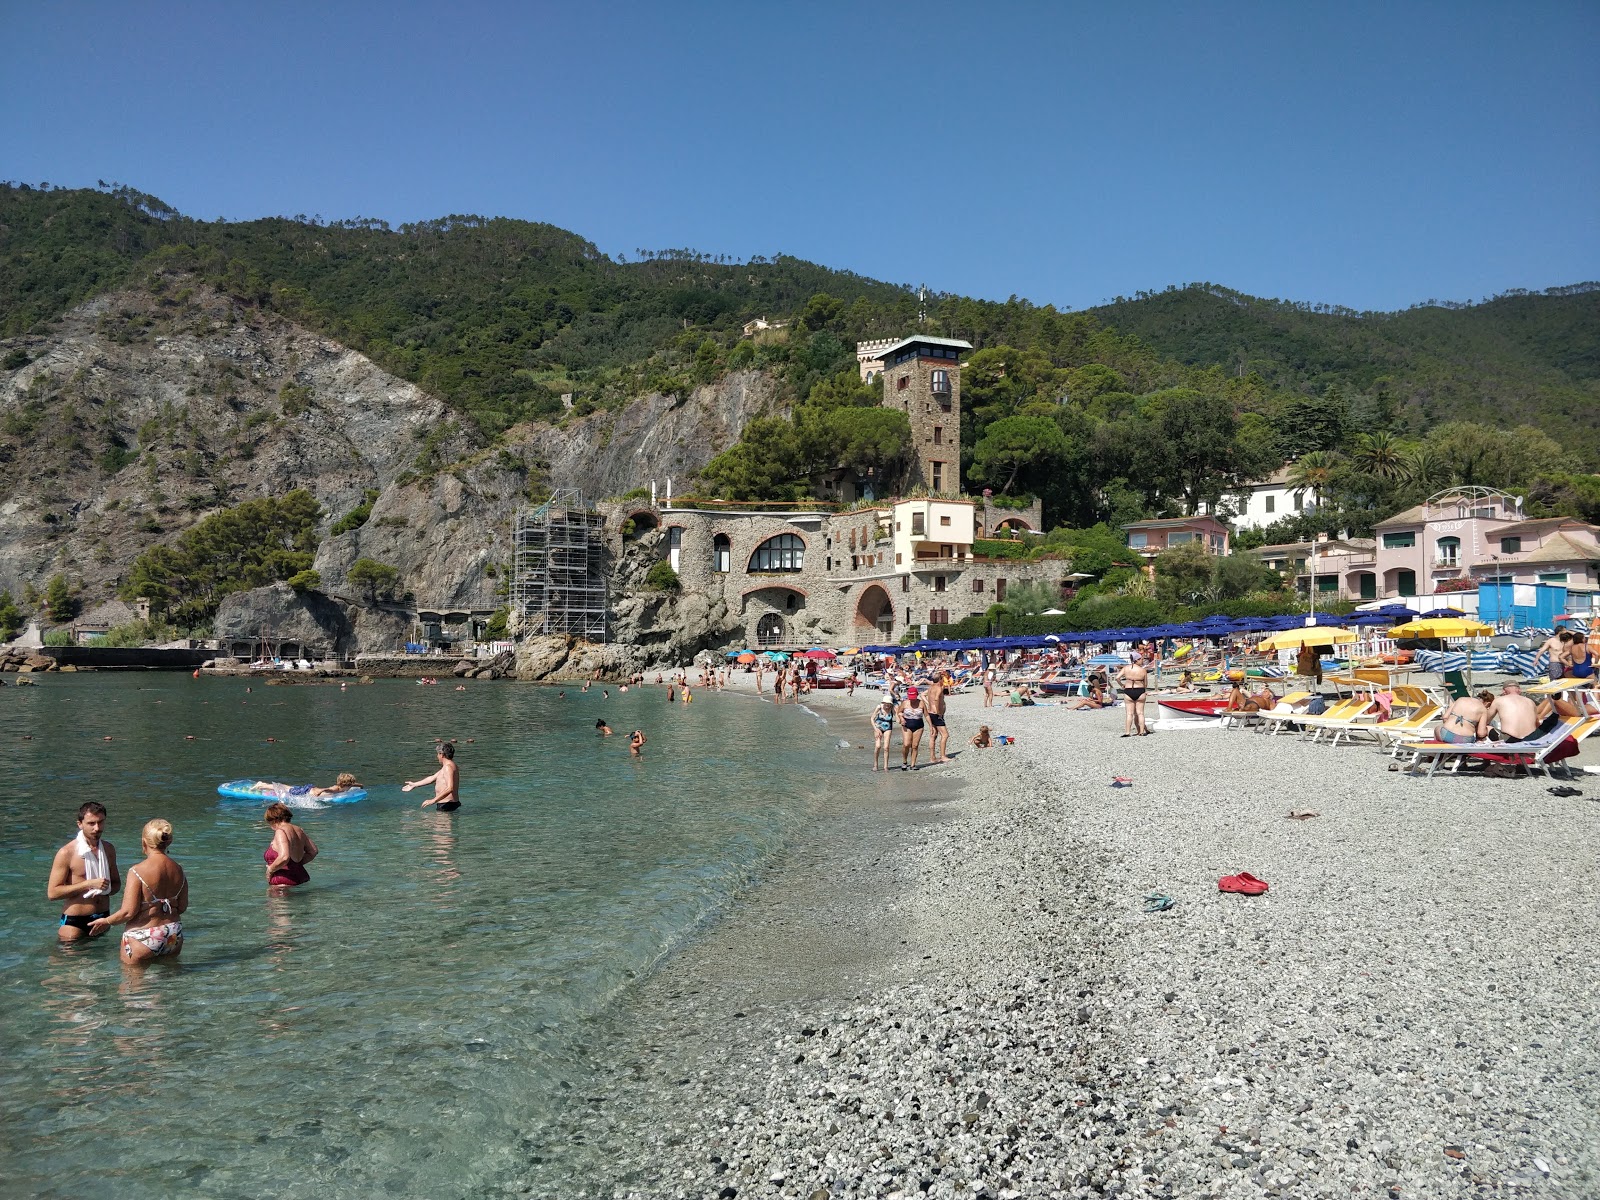 Photo of Spiaggia del Gigante with spacious multi bays